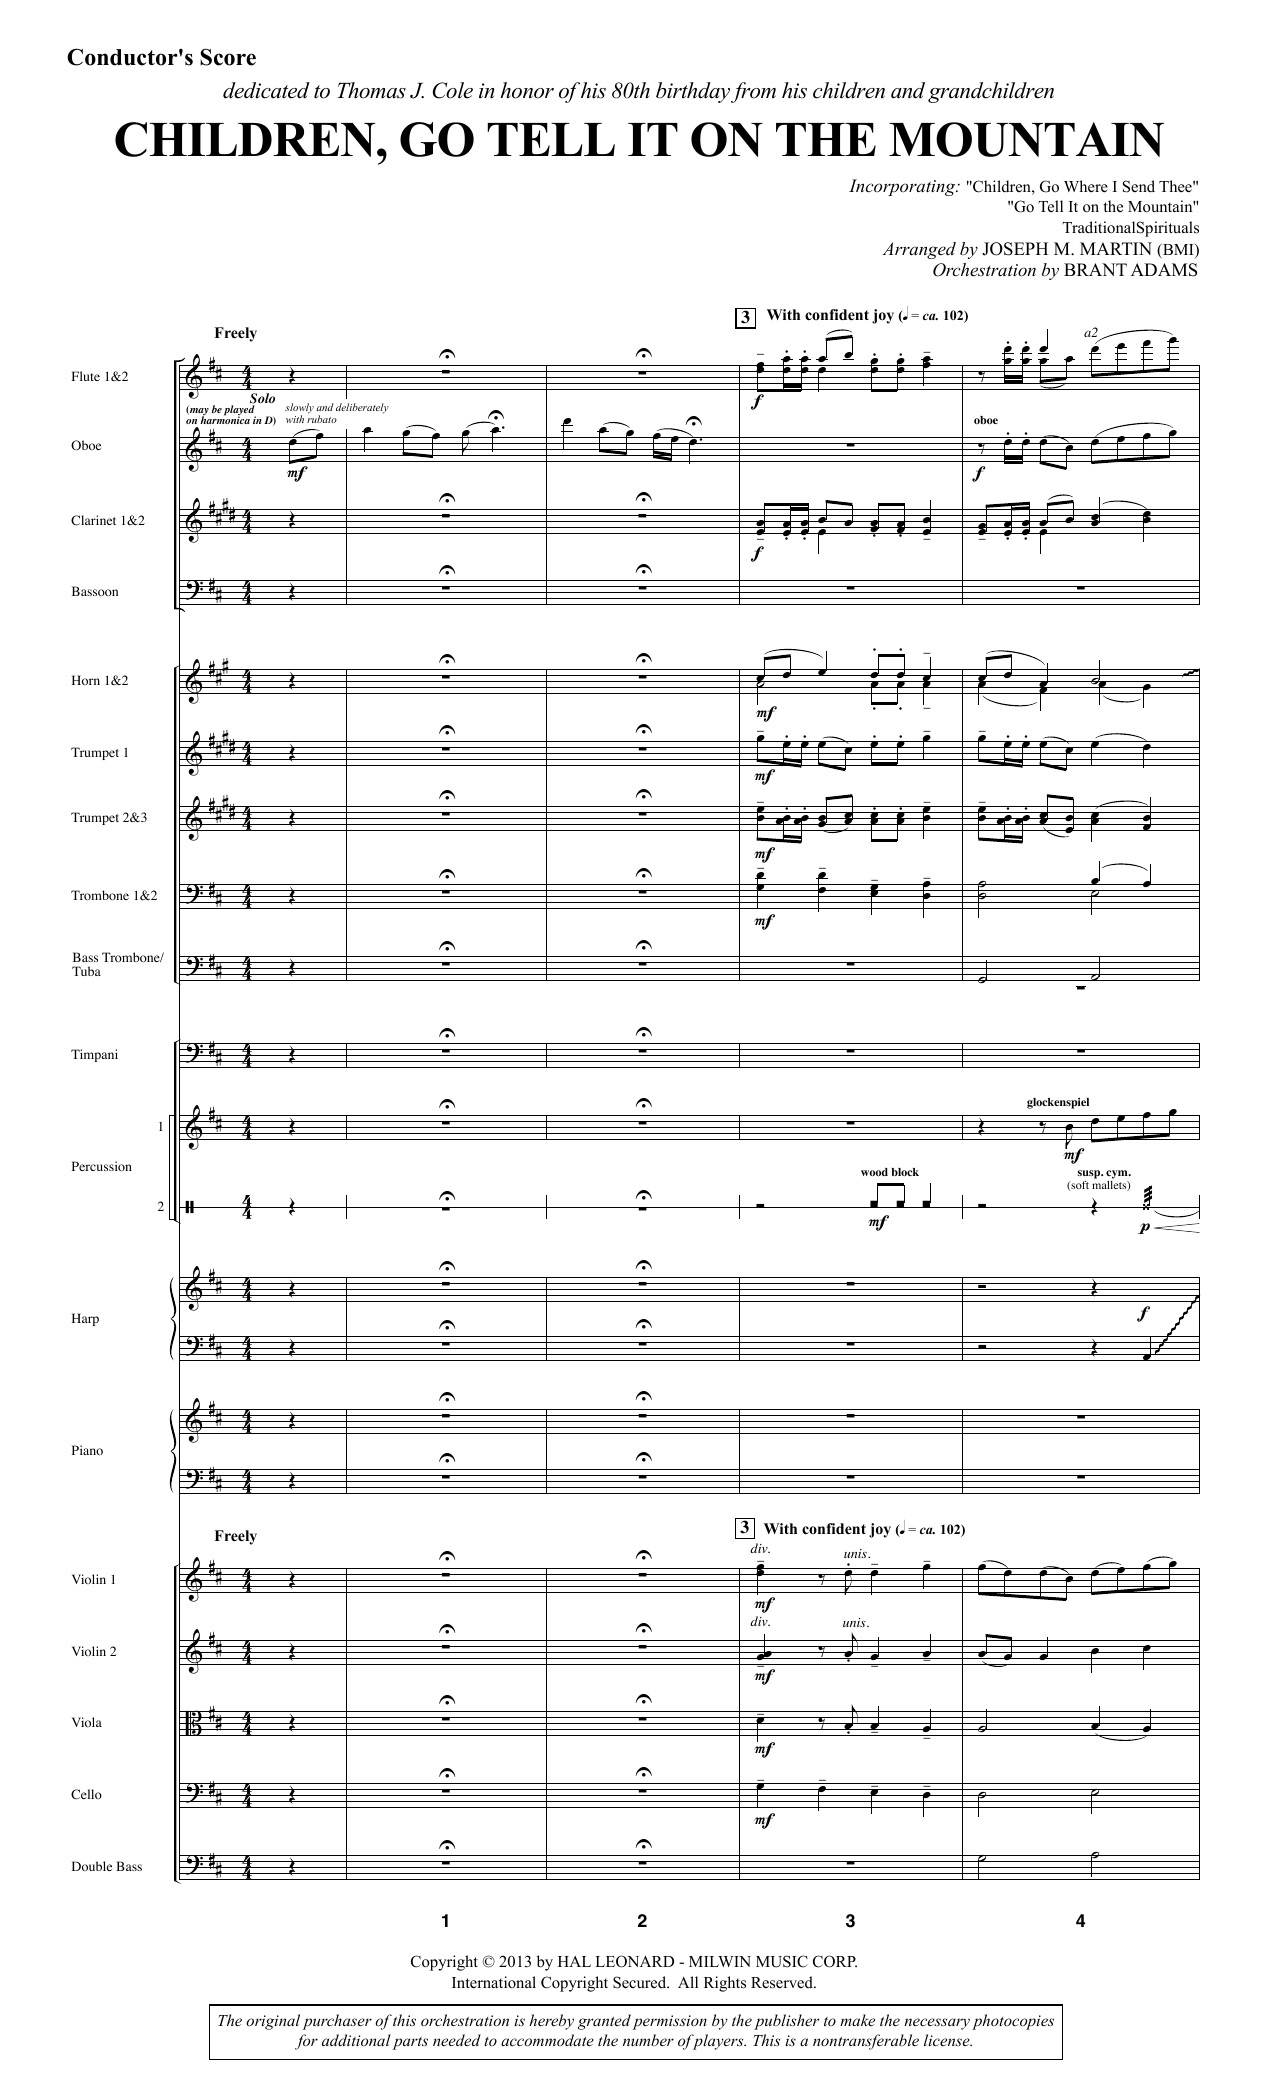 Joseph M. Martin Children, Go Tell It on the Mountain - Full Score Sheet Music Notes & Chords for Choir Instrumental Pak - Download or Print PDF